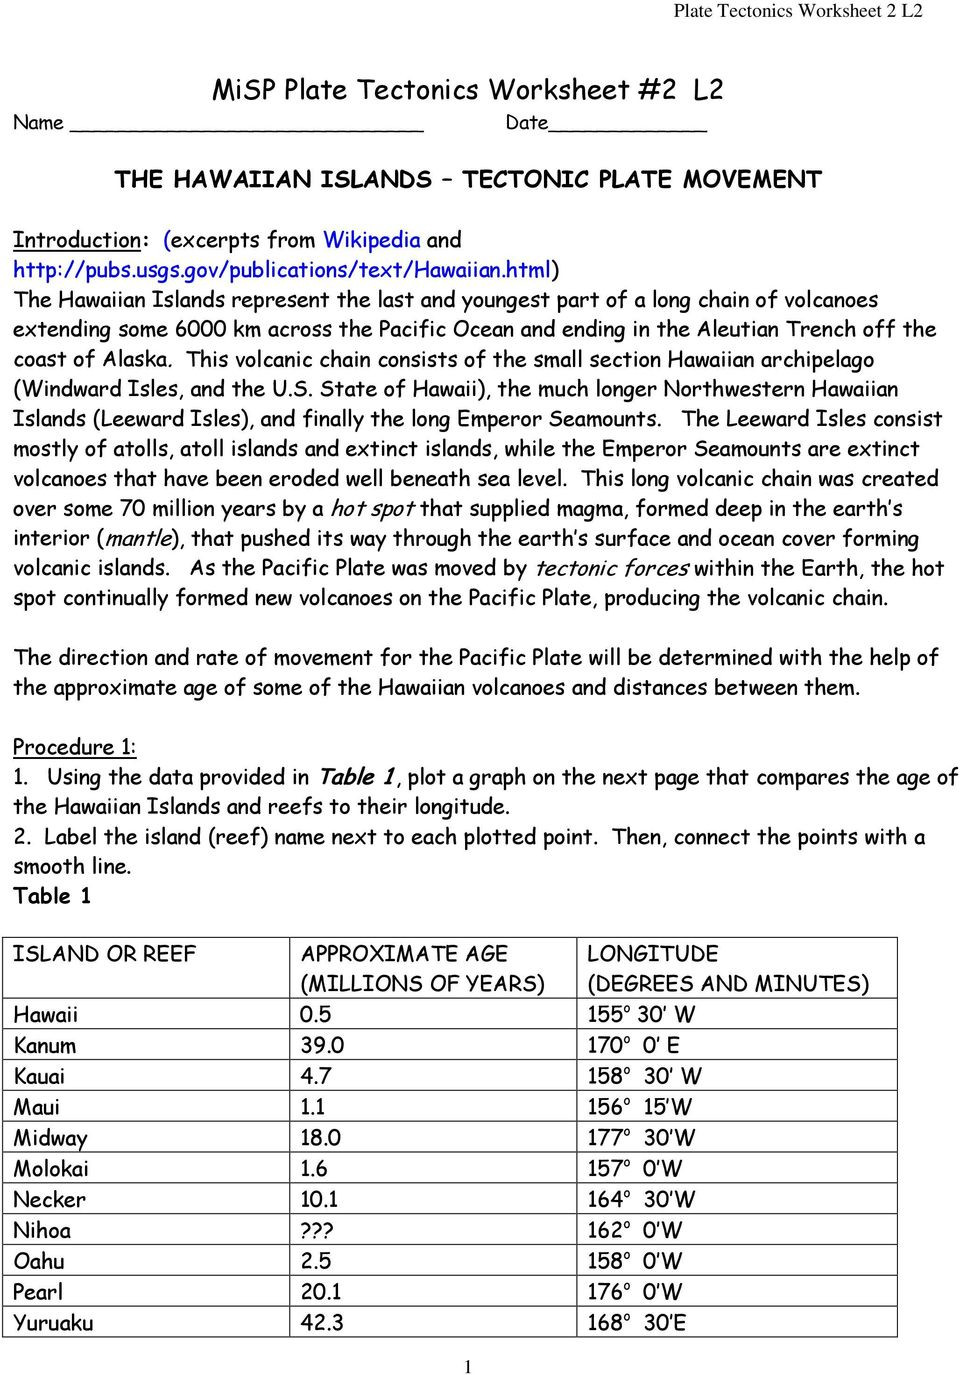 Plate Boundary Worksheet Answers Misp Plate Tectonics Worksheet 2 L2 Pdf Free Download